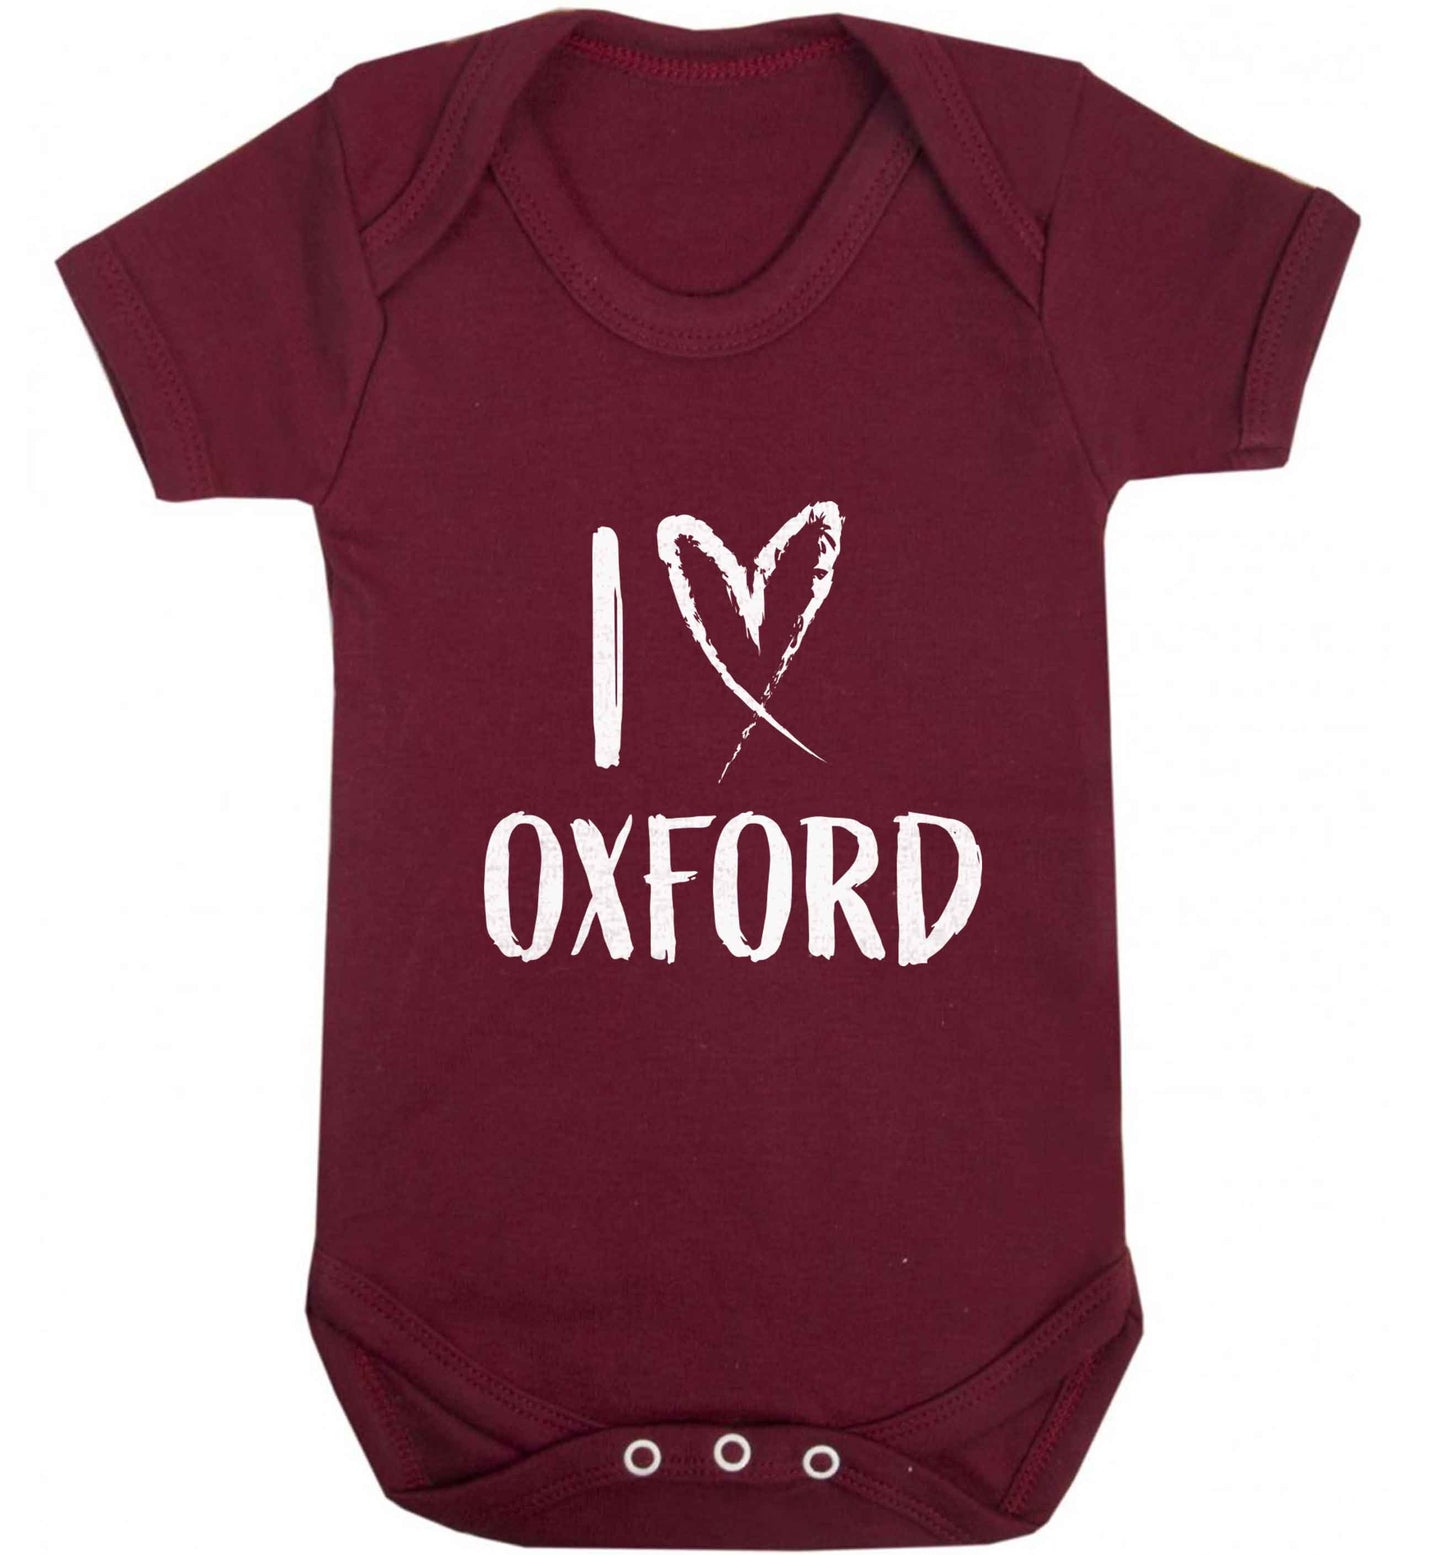 I love Oxford baby vest maroon 18-24 months